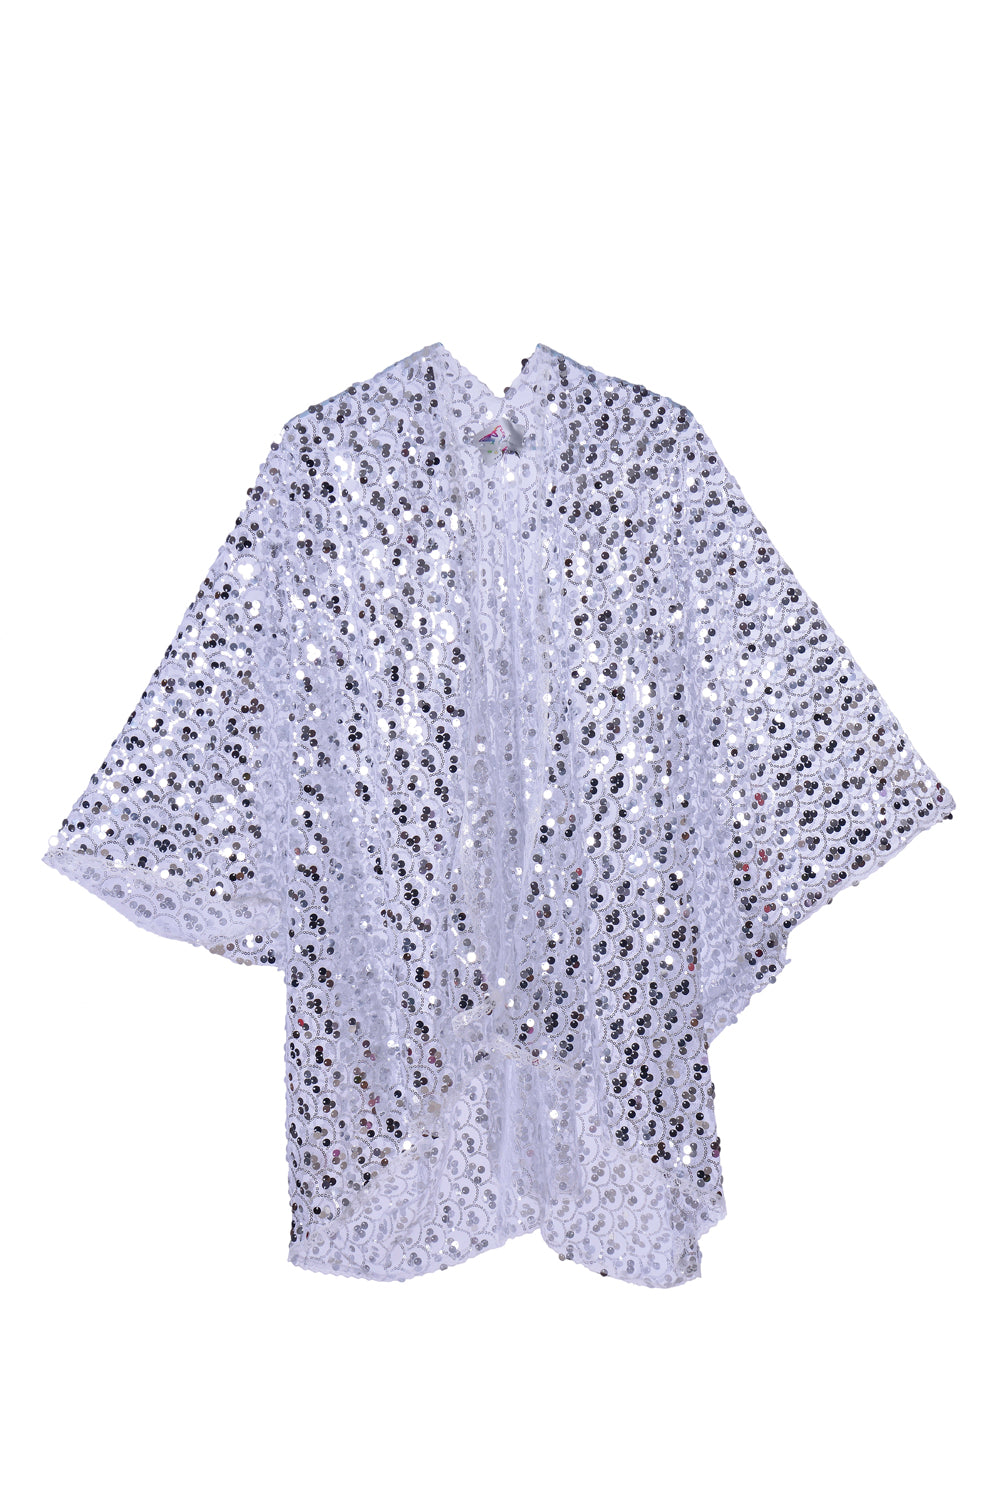 Sequin Kimono- Disco Silver